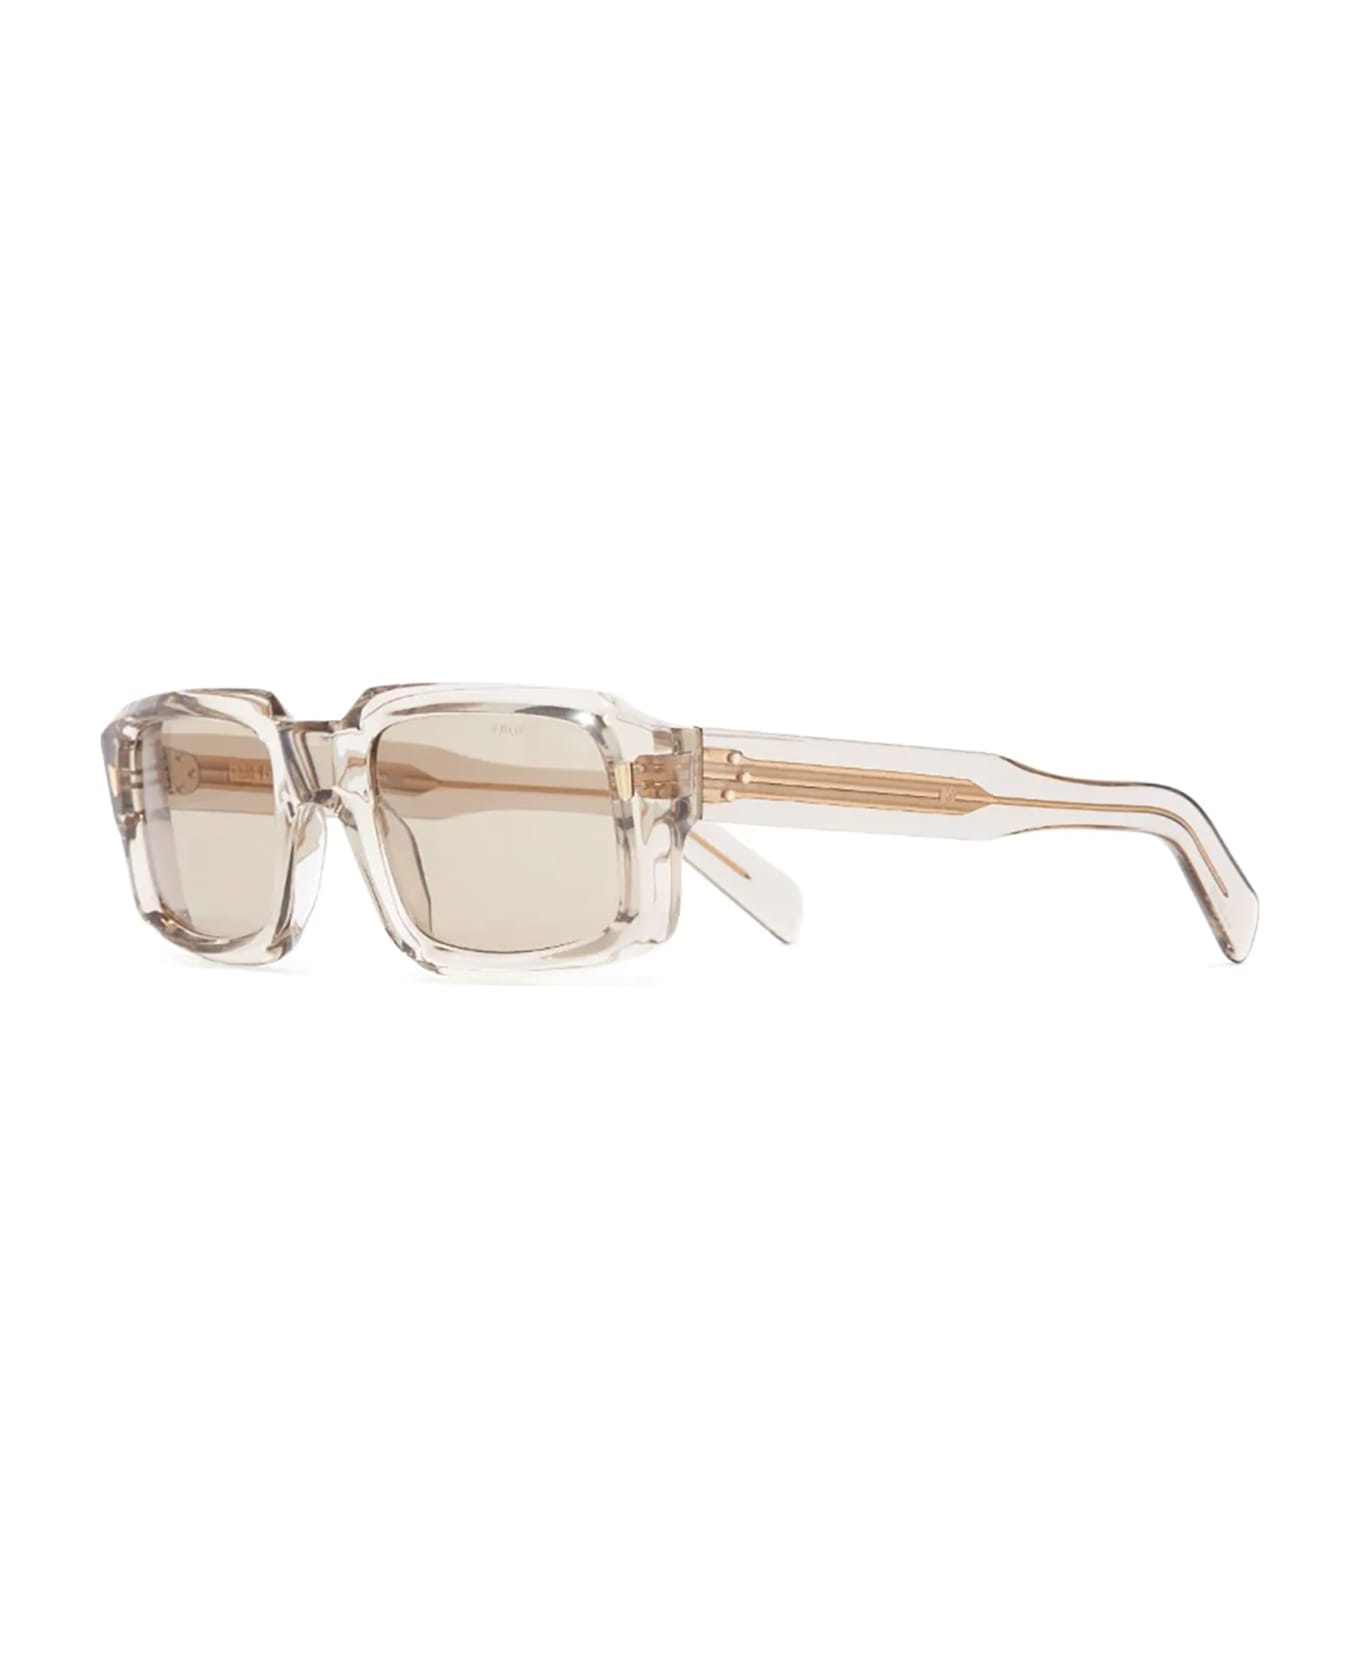 Cutler and Gross 9495 Sunglasses - Sand Crystal サングラス